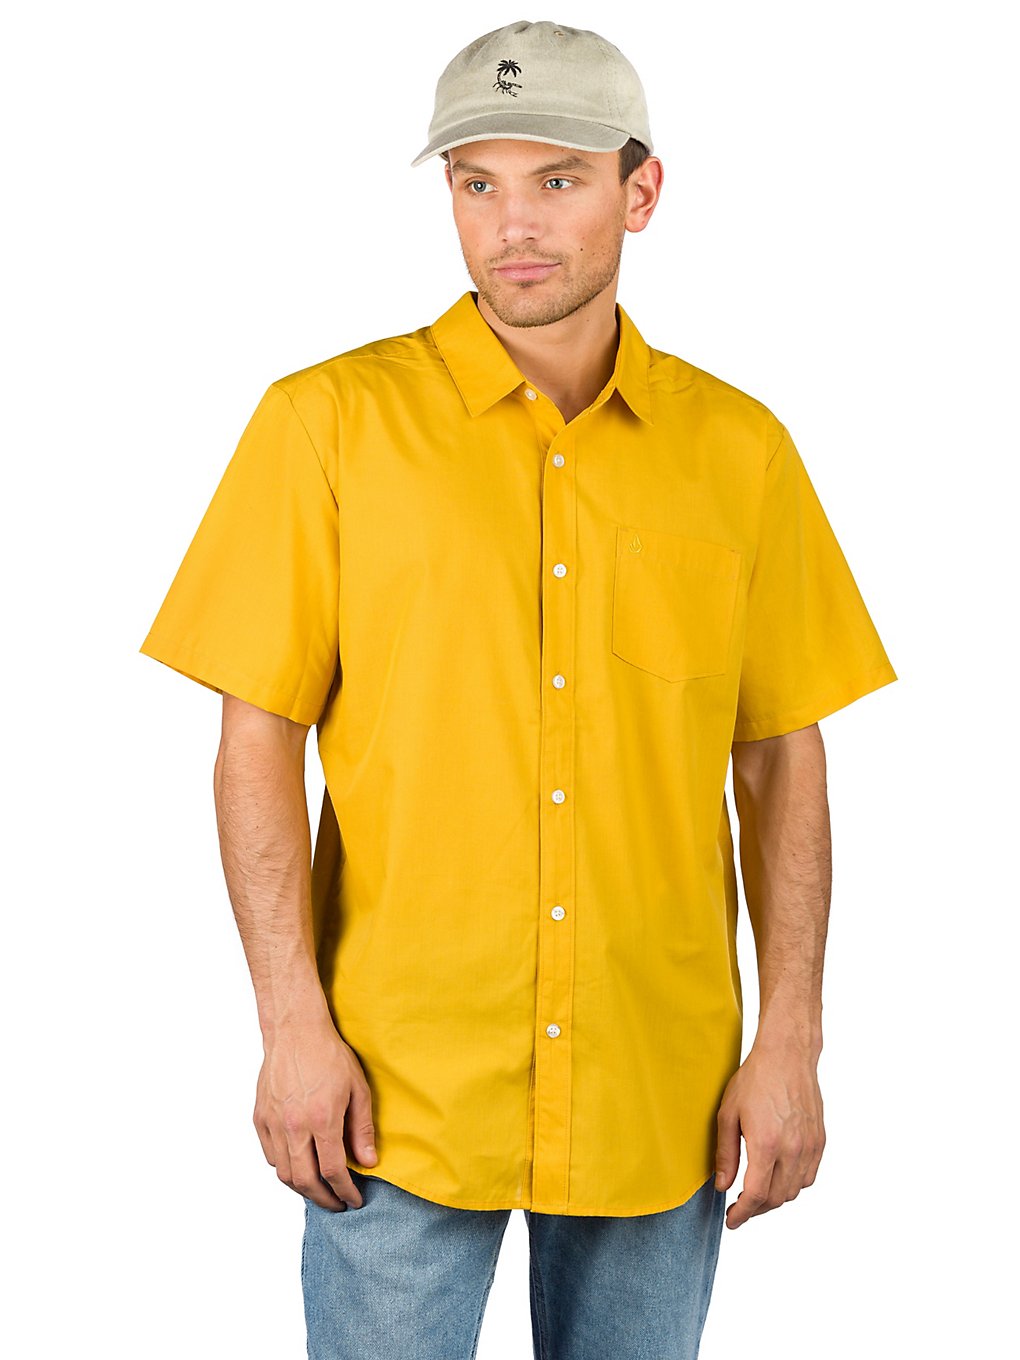 Volcom cj collins shirt keltainen, volcom